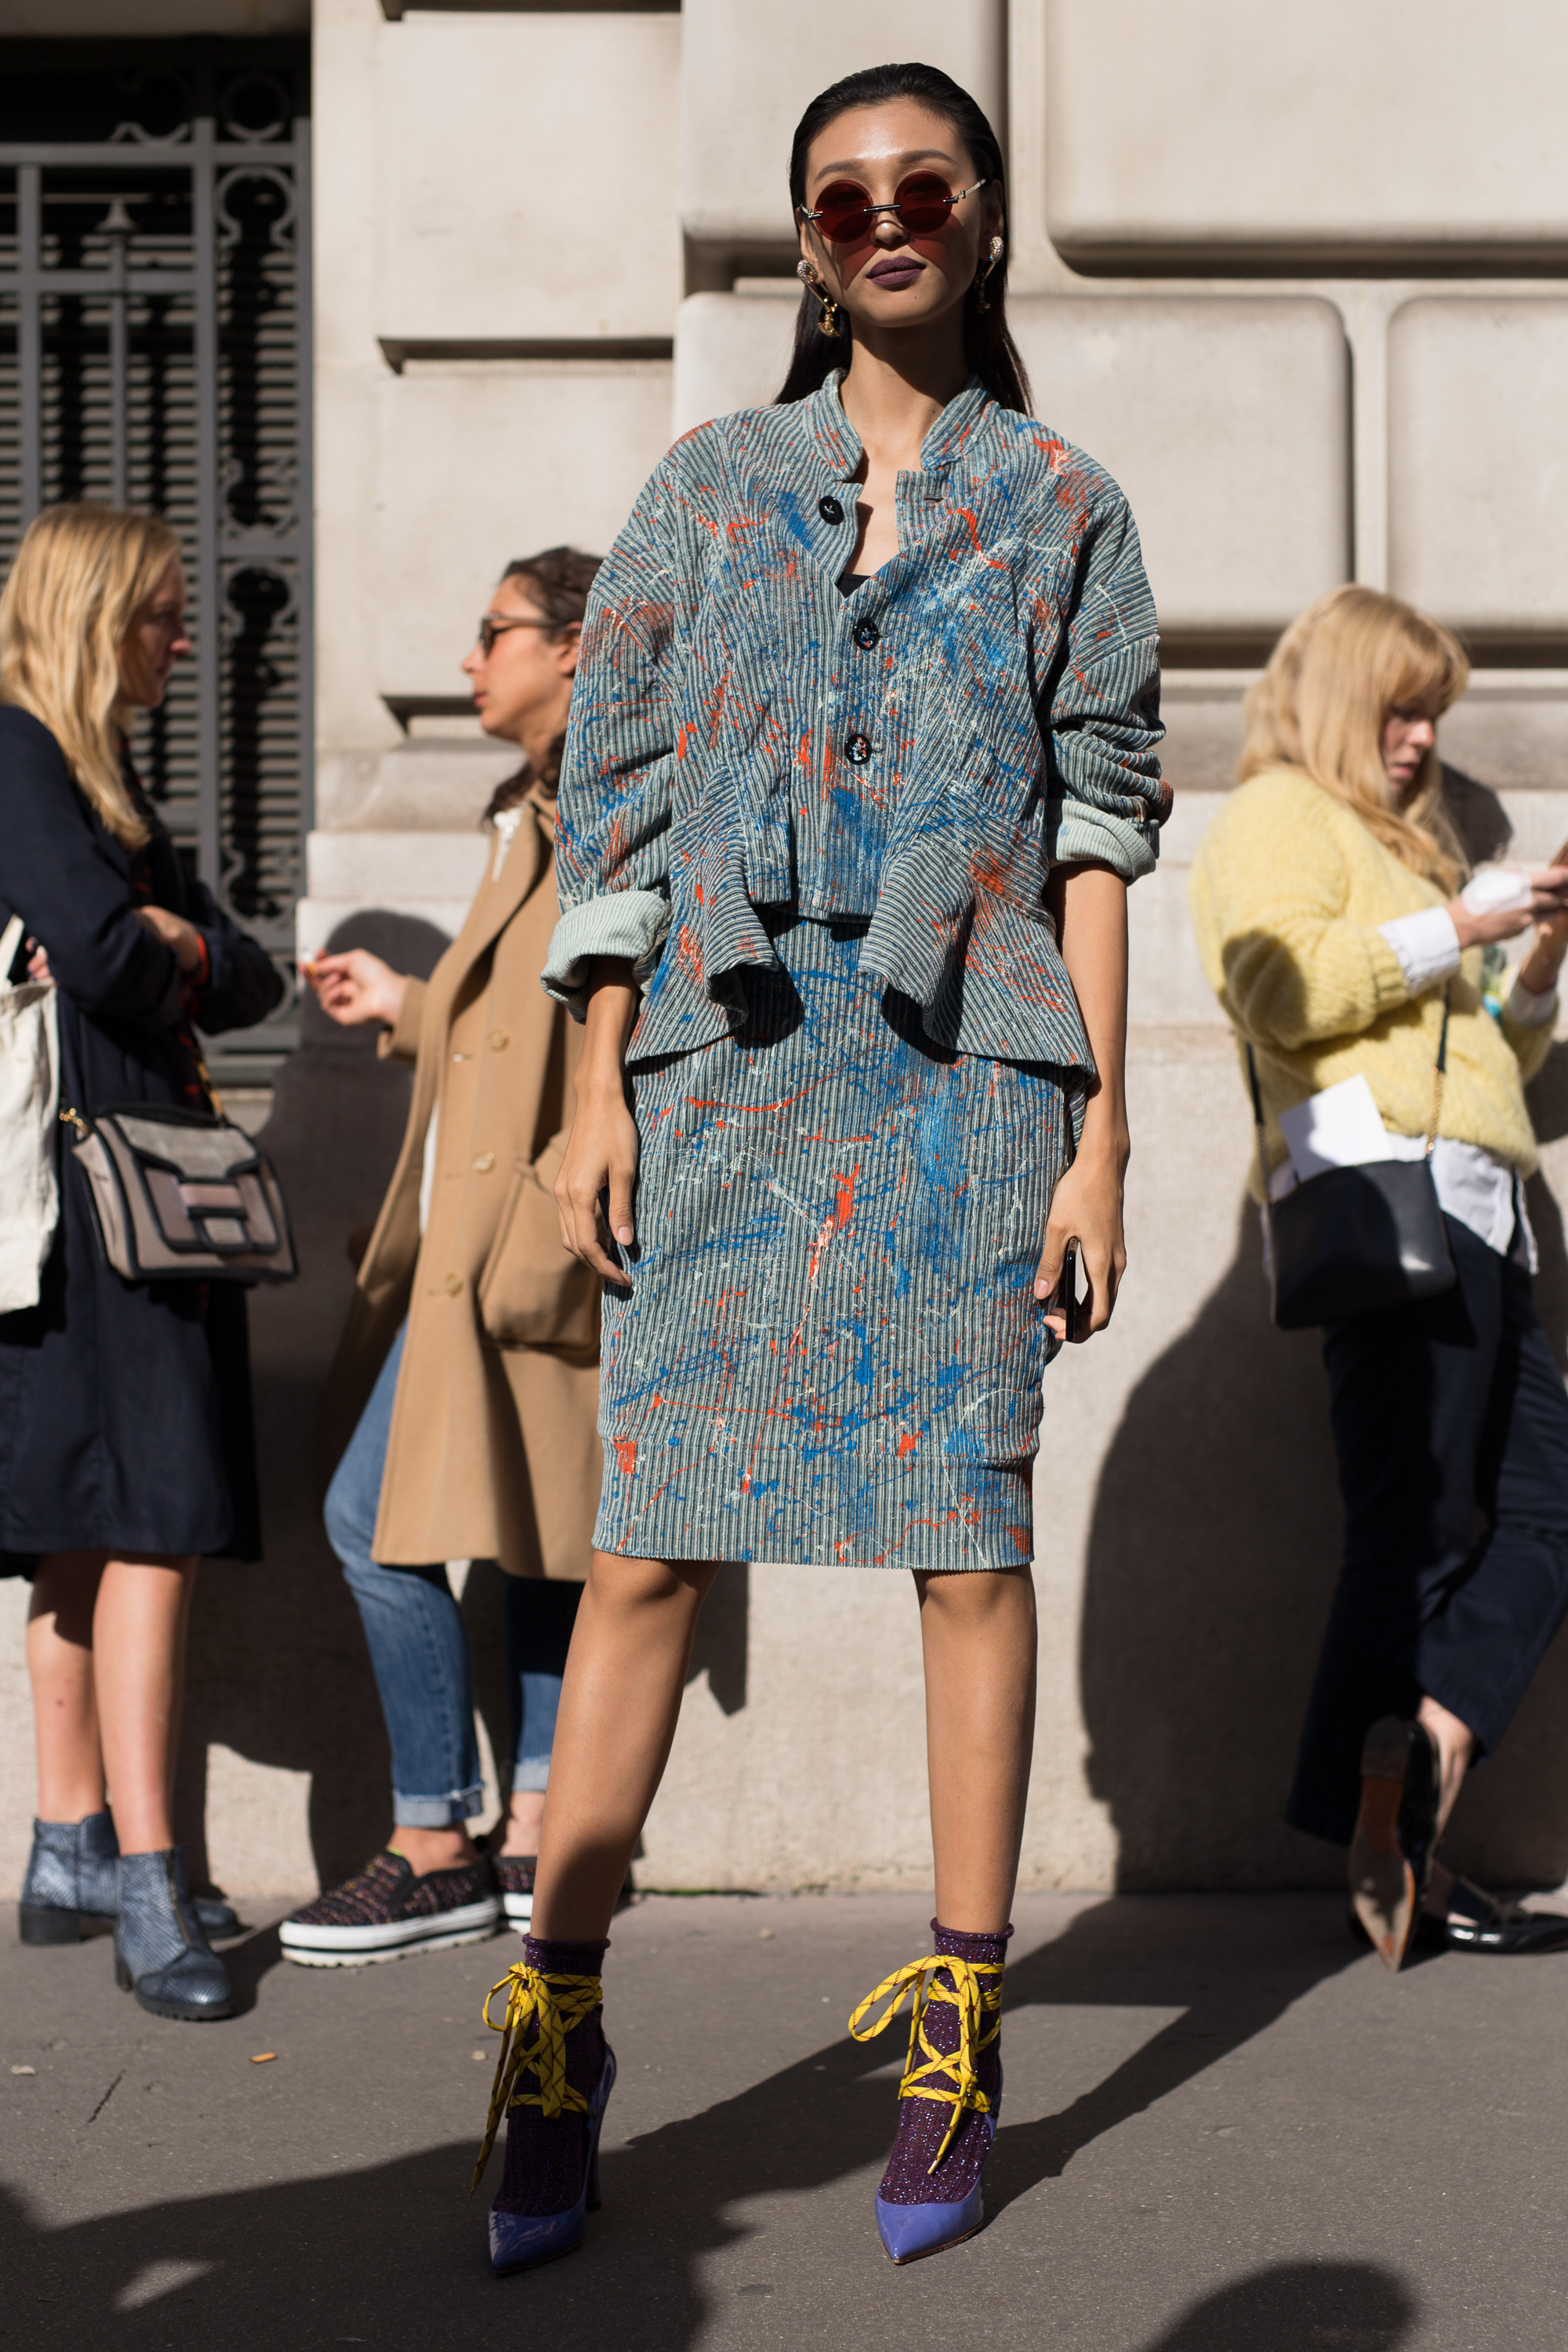 PARIS, FRANCE - SEPTEMBER 30: A guest is seen attending Vivienne Westwood during Paris Fashion Week wearing Vivienne Westwood on September 30, 2017 in Paris, France. (Photo by Matthew Sperzel/Getty Images)